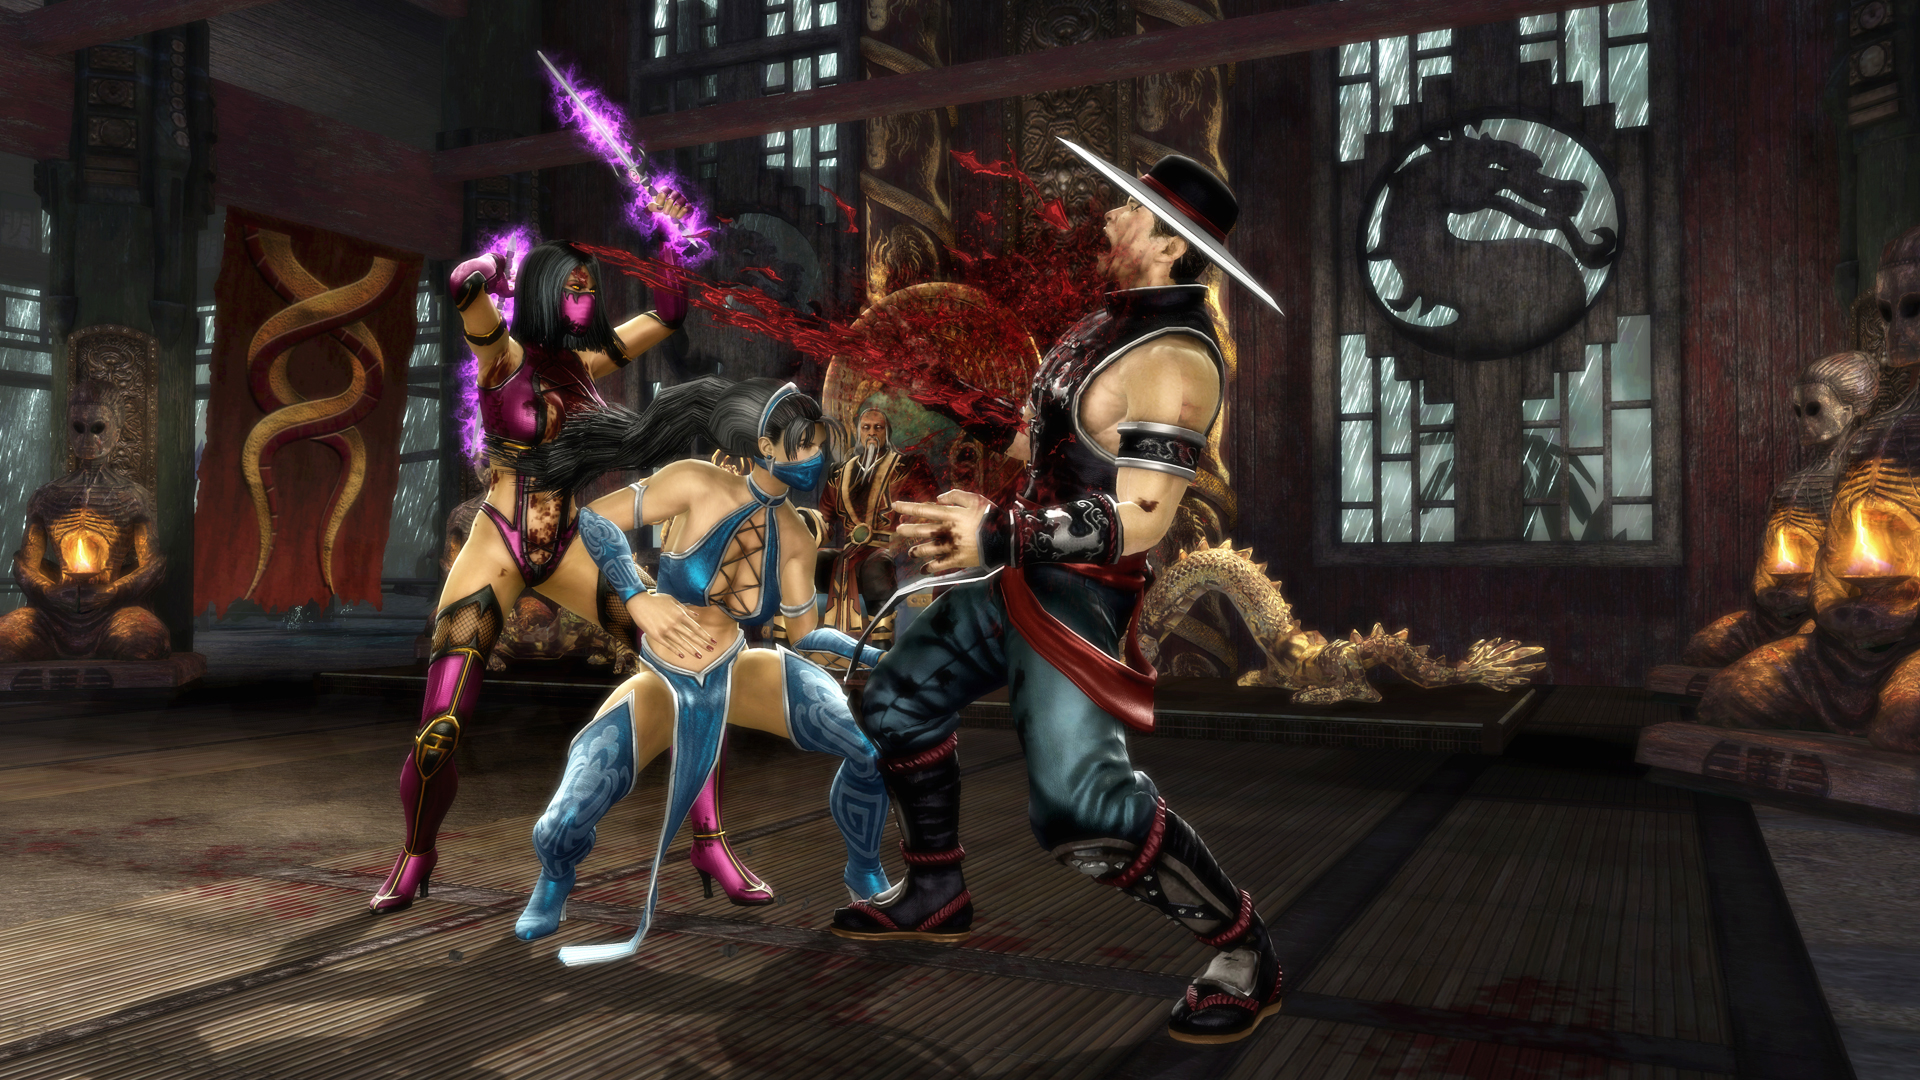 How To Unlock Dlc Characters In Mortal Kombat 9 Komplete Edition